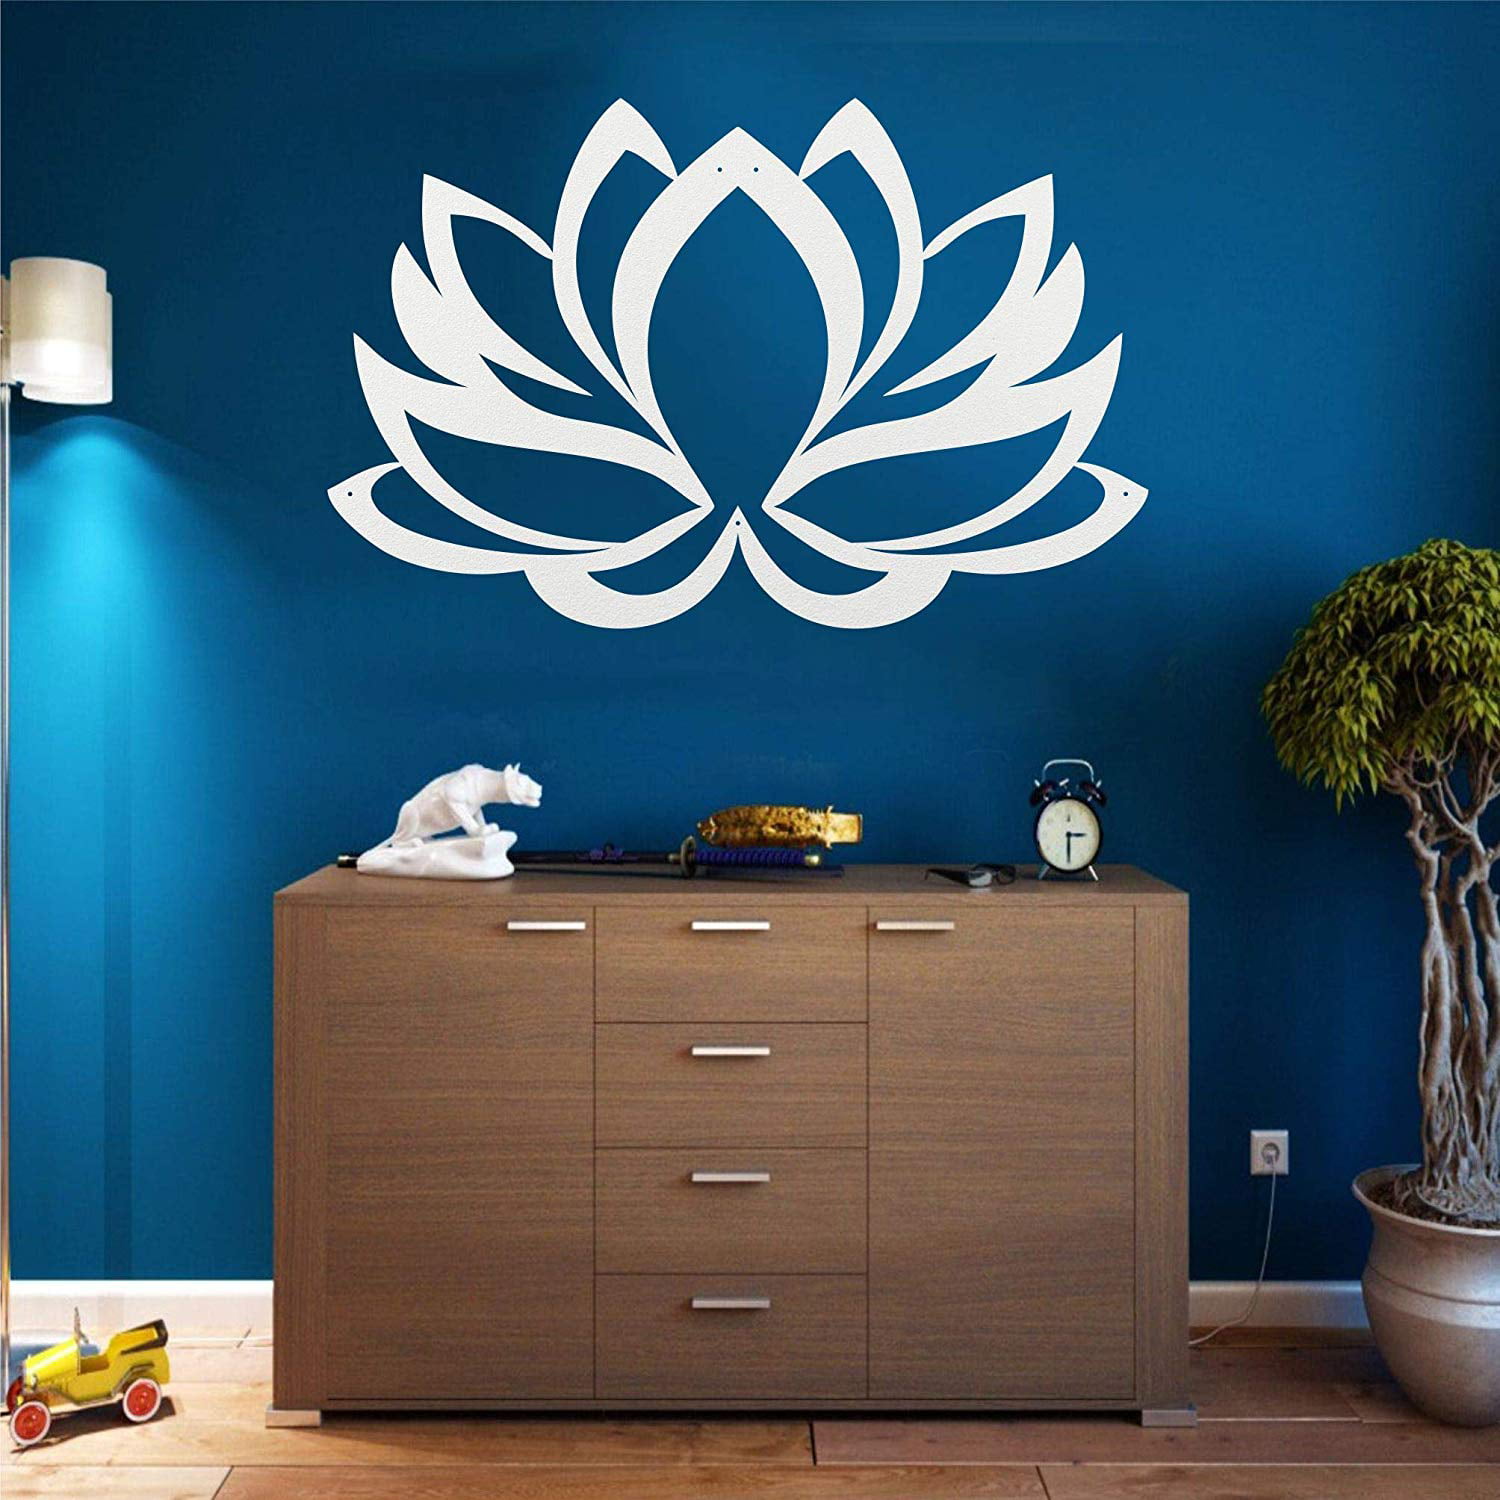 LaModaHome Metal Wall Art - Lotus Flower - 3D Wall Silhouette Metal